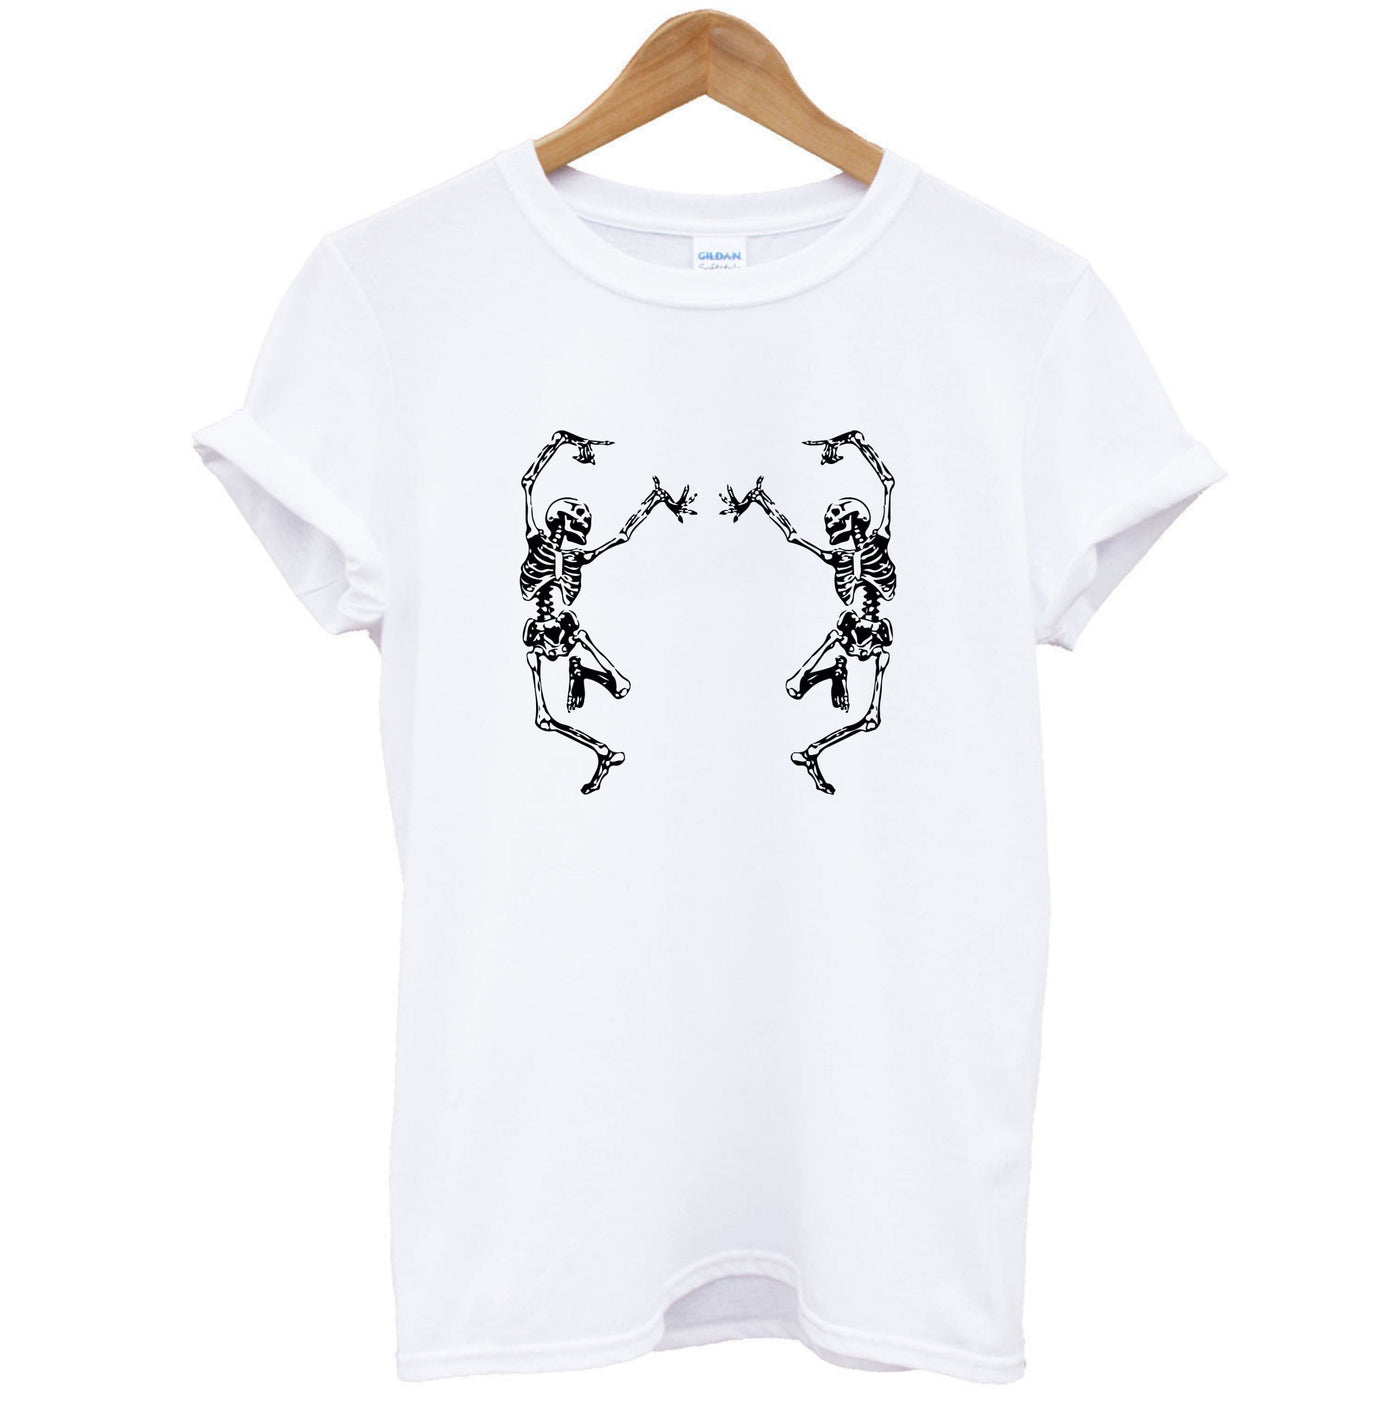 Dancing Skeletons - Halloween T-Shirt